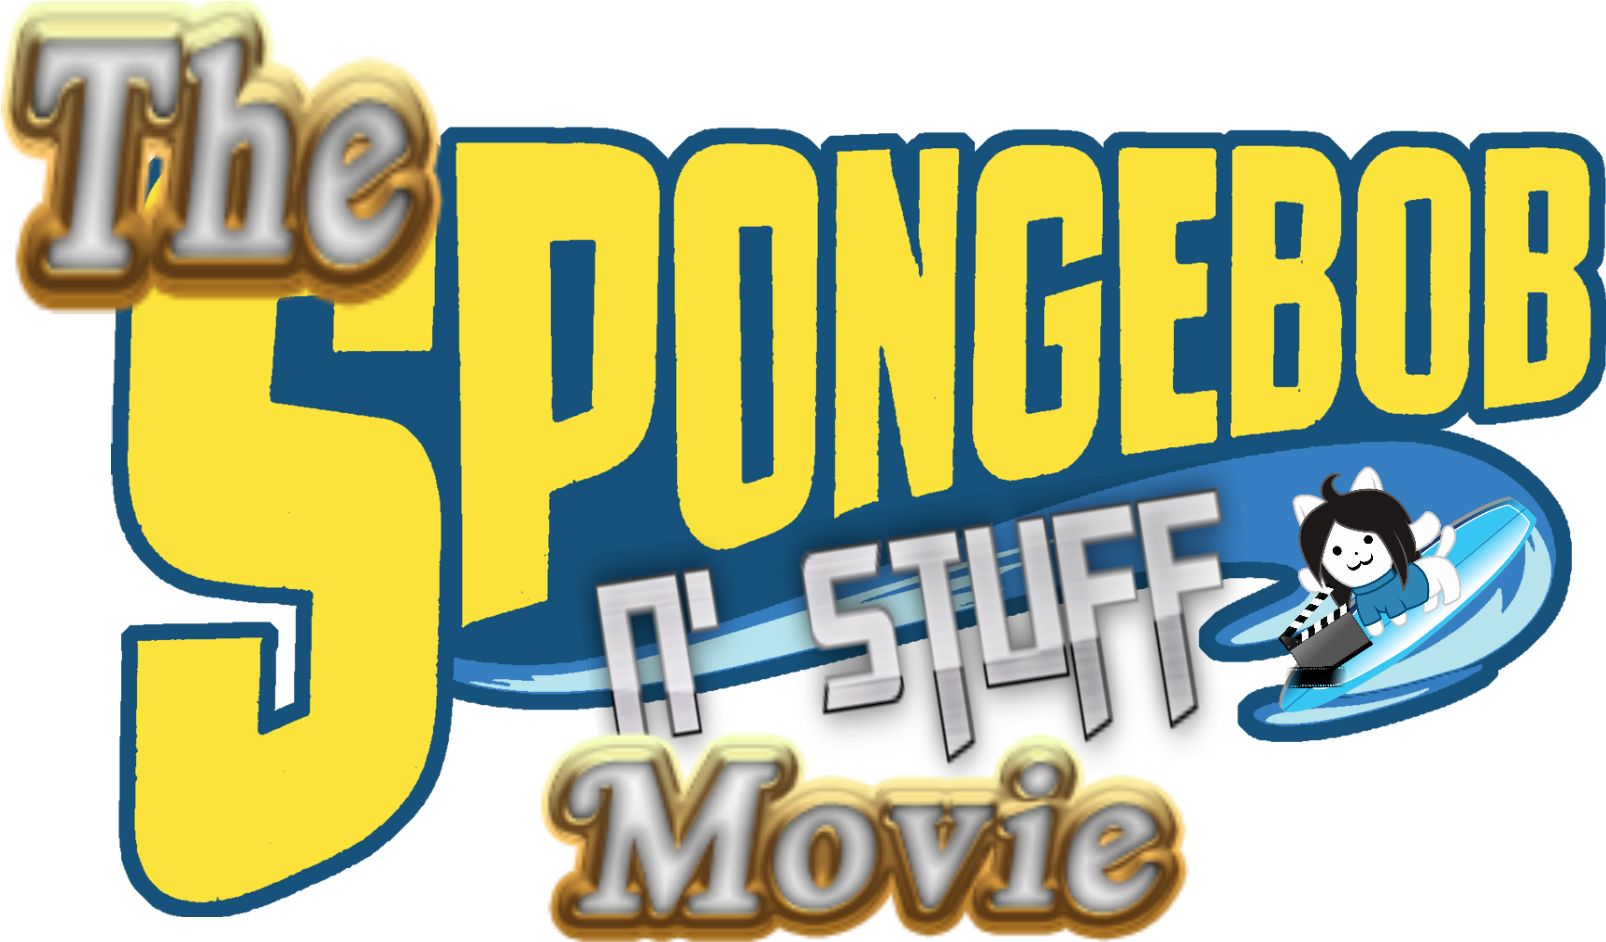 Sponge Bob Free Stuff Movie Logo PNG image